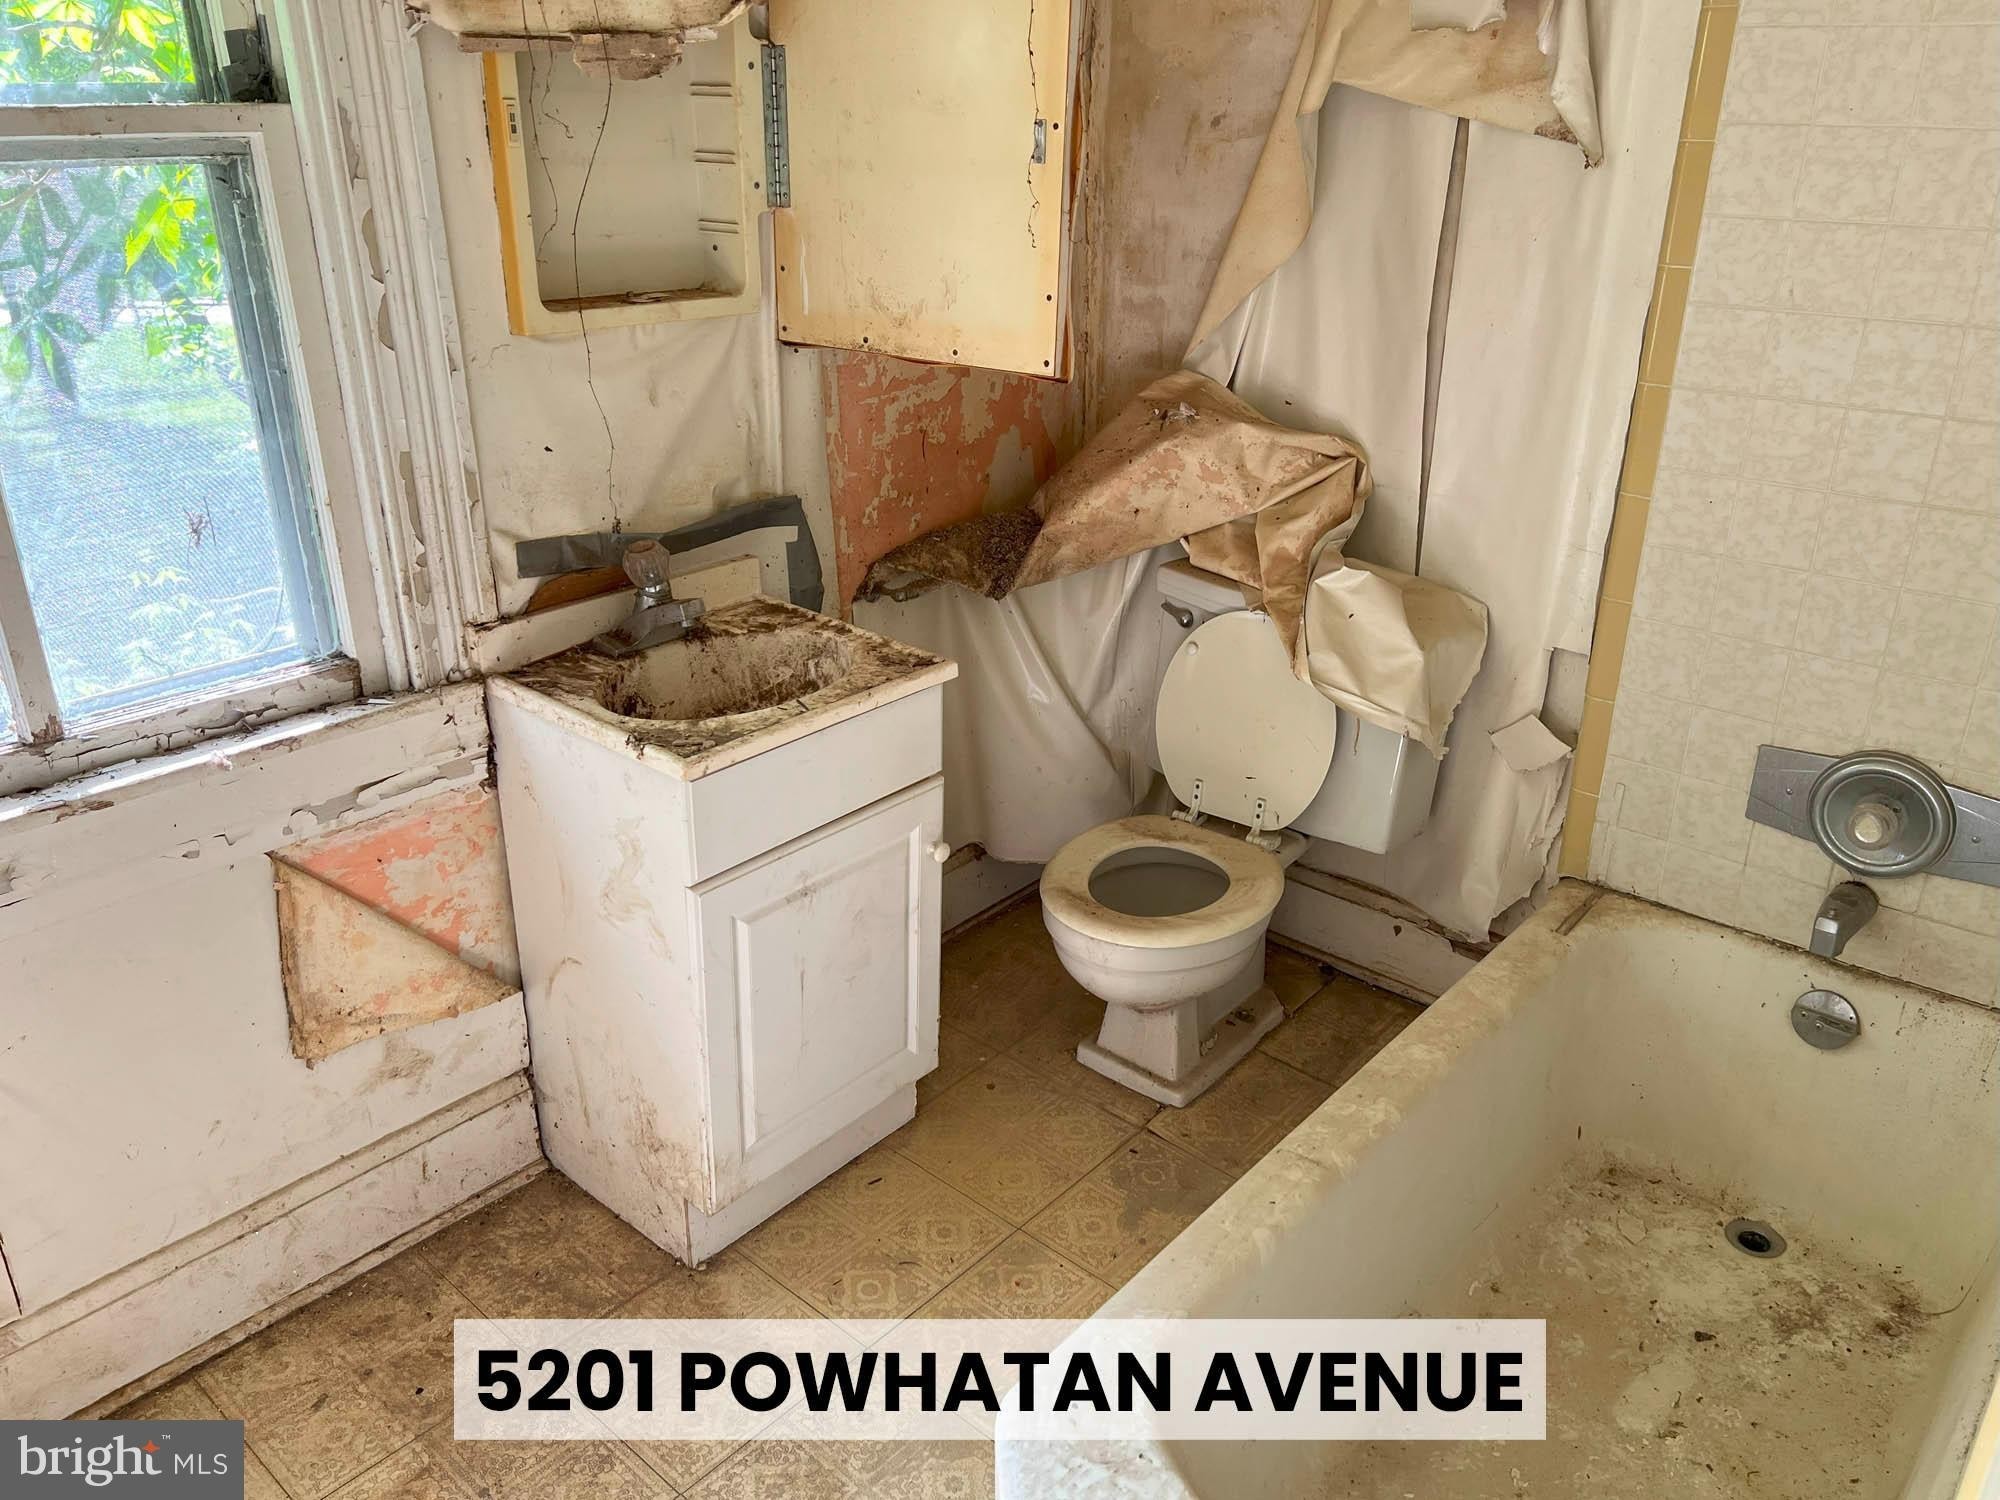 7. 5201 Powhatan Avenue